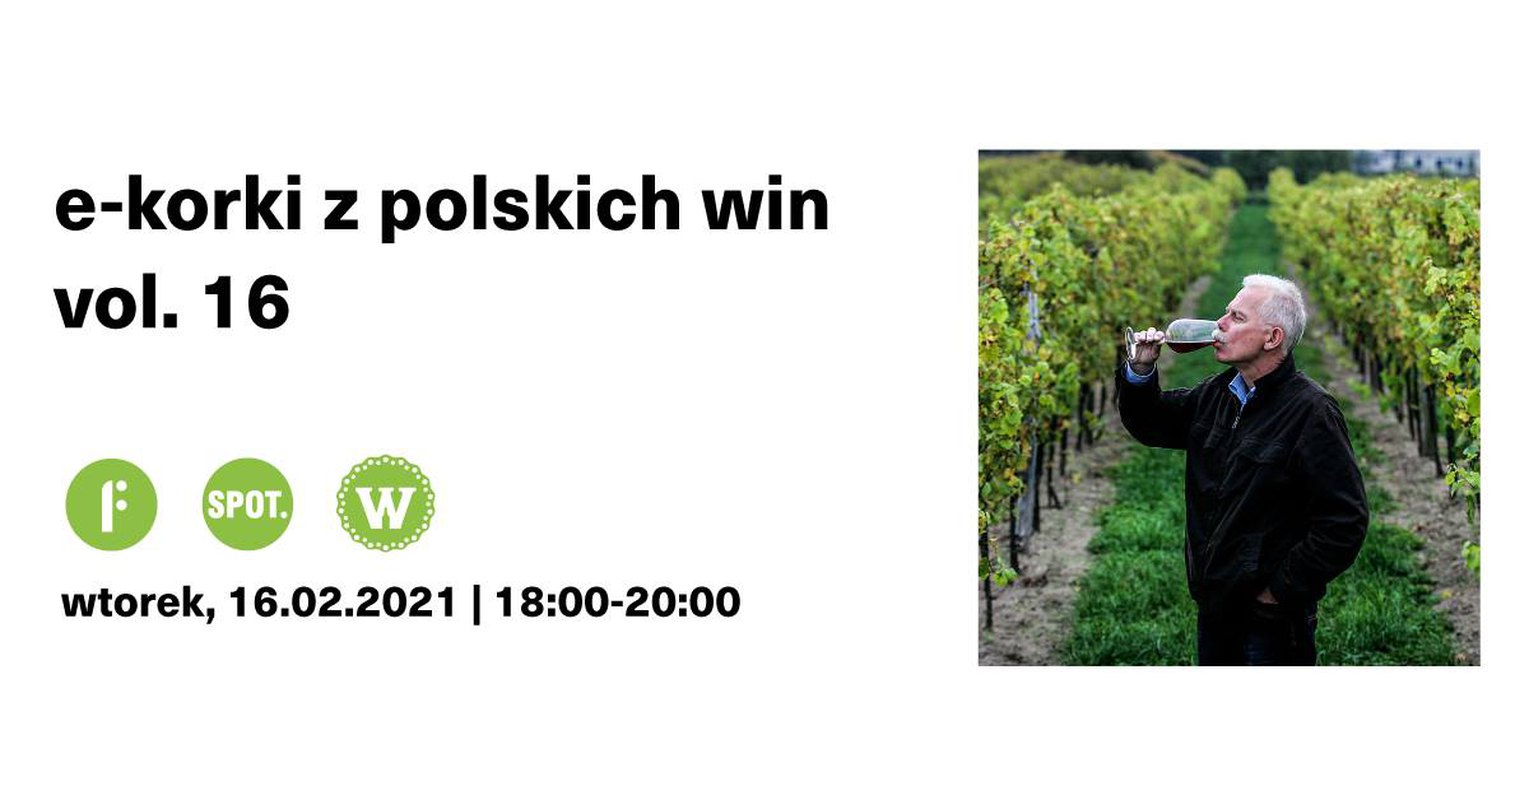 e-korki z polskich win vol. 16